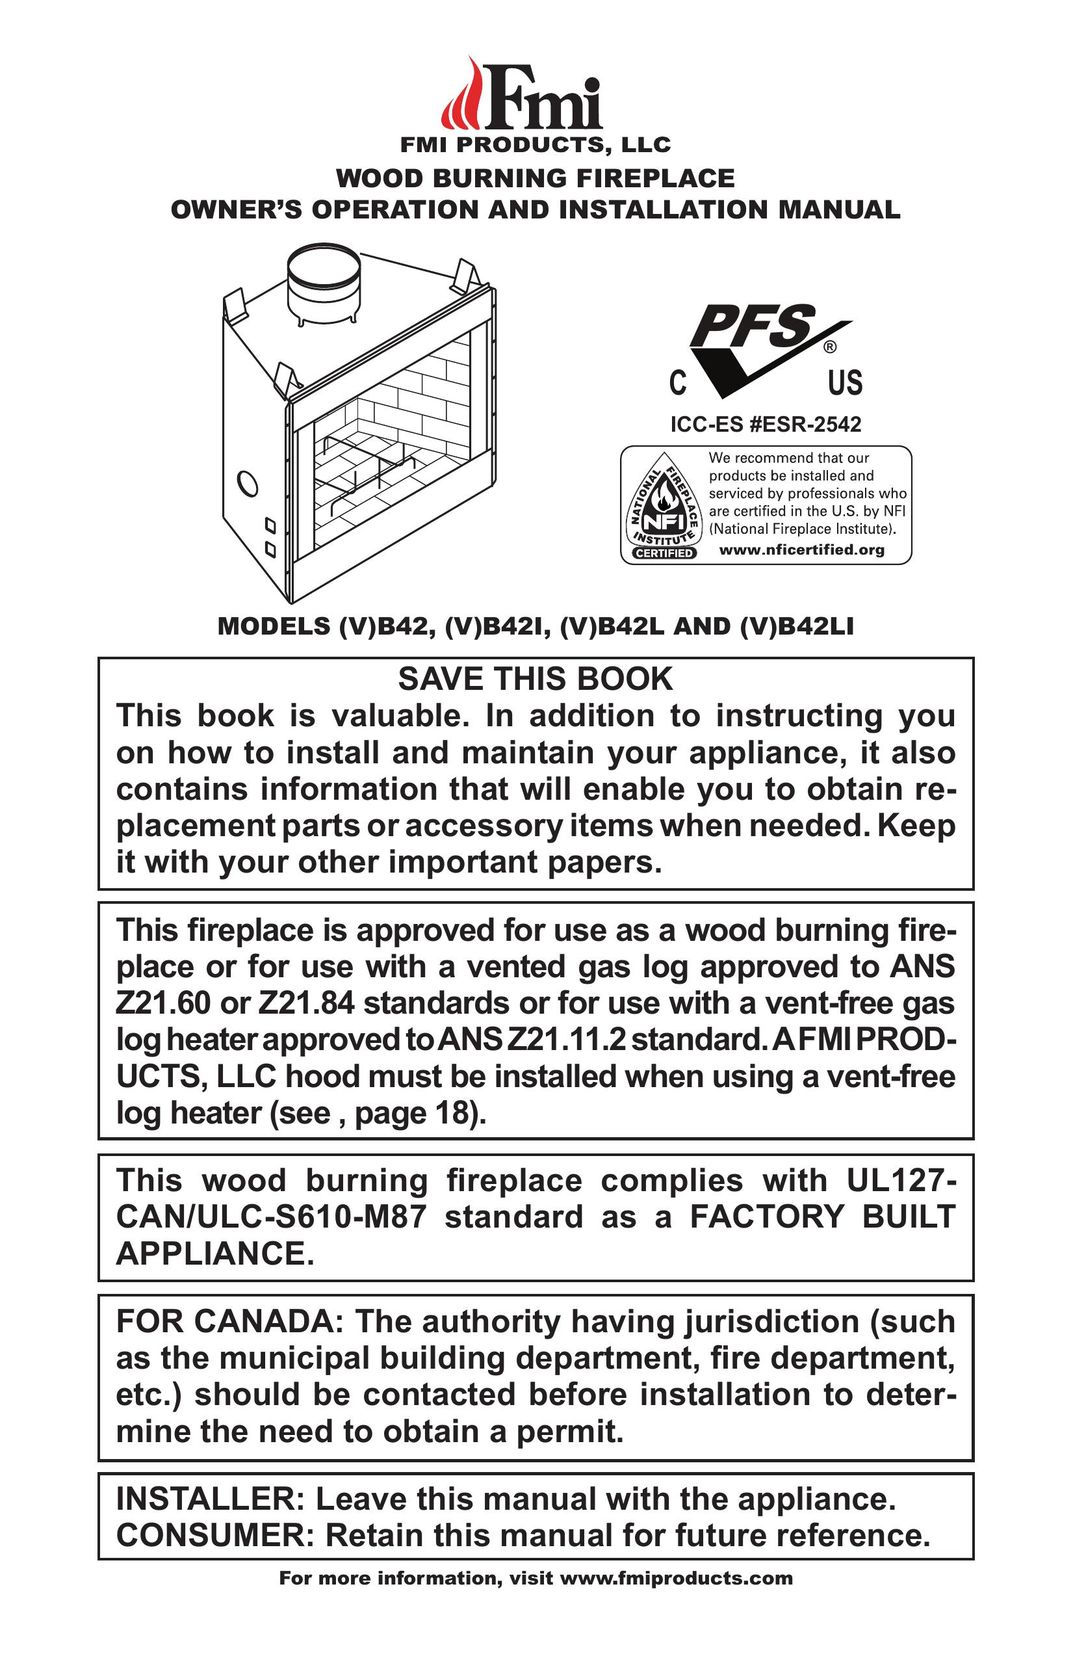 FMI (V)B42 Indoor Fireplace User Manual